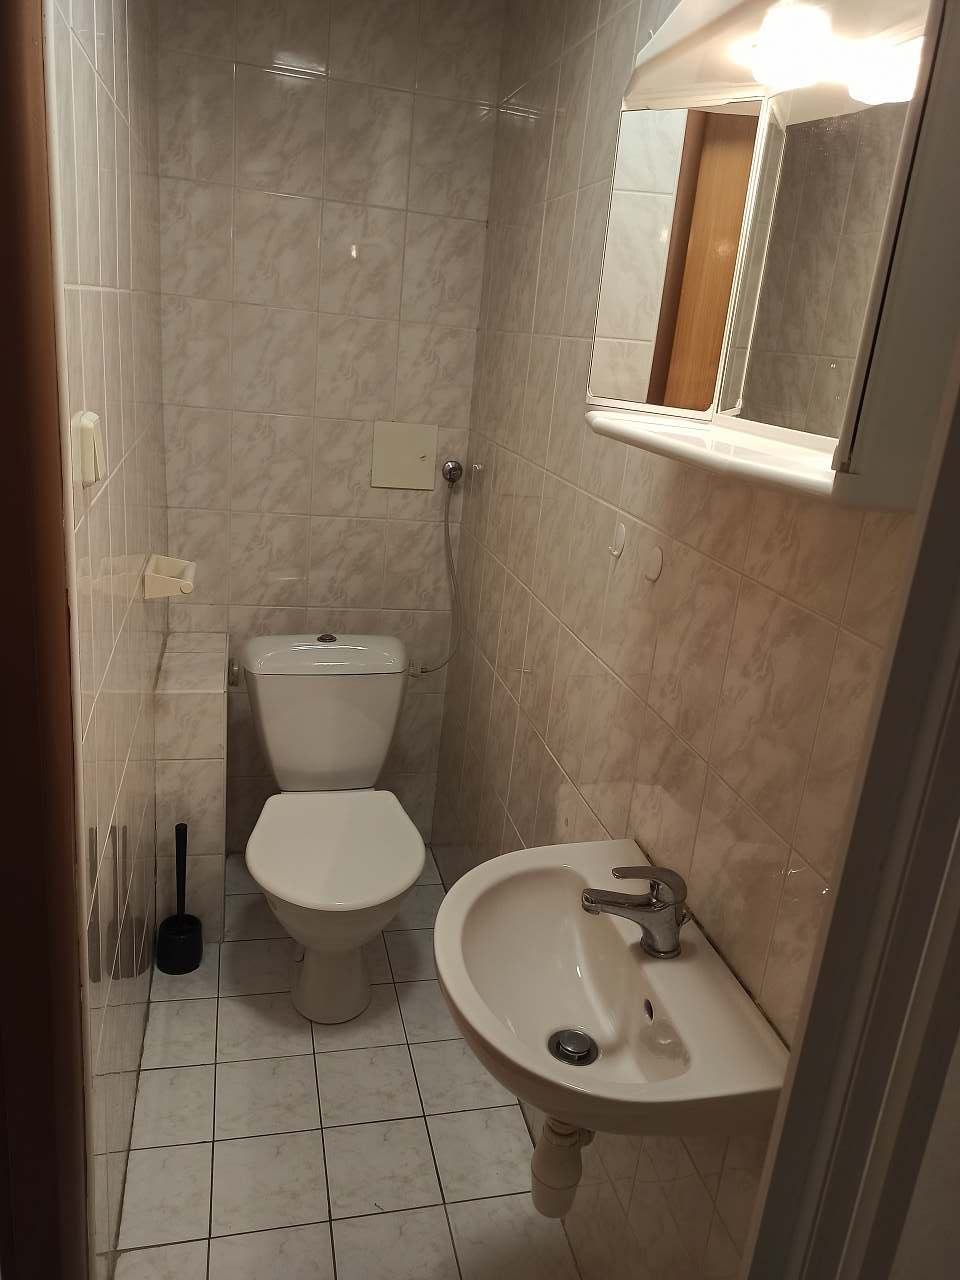 Pokoj č. 1 s koupelnou, wc a sprchou